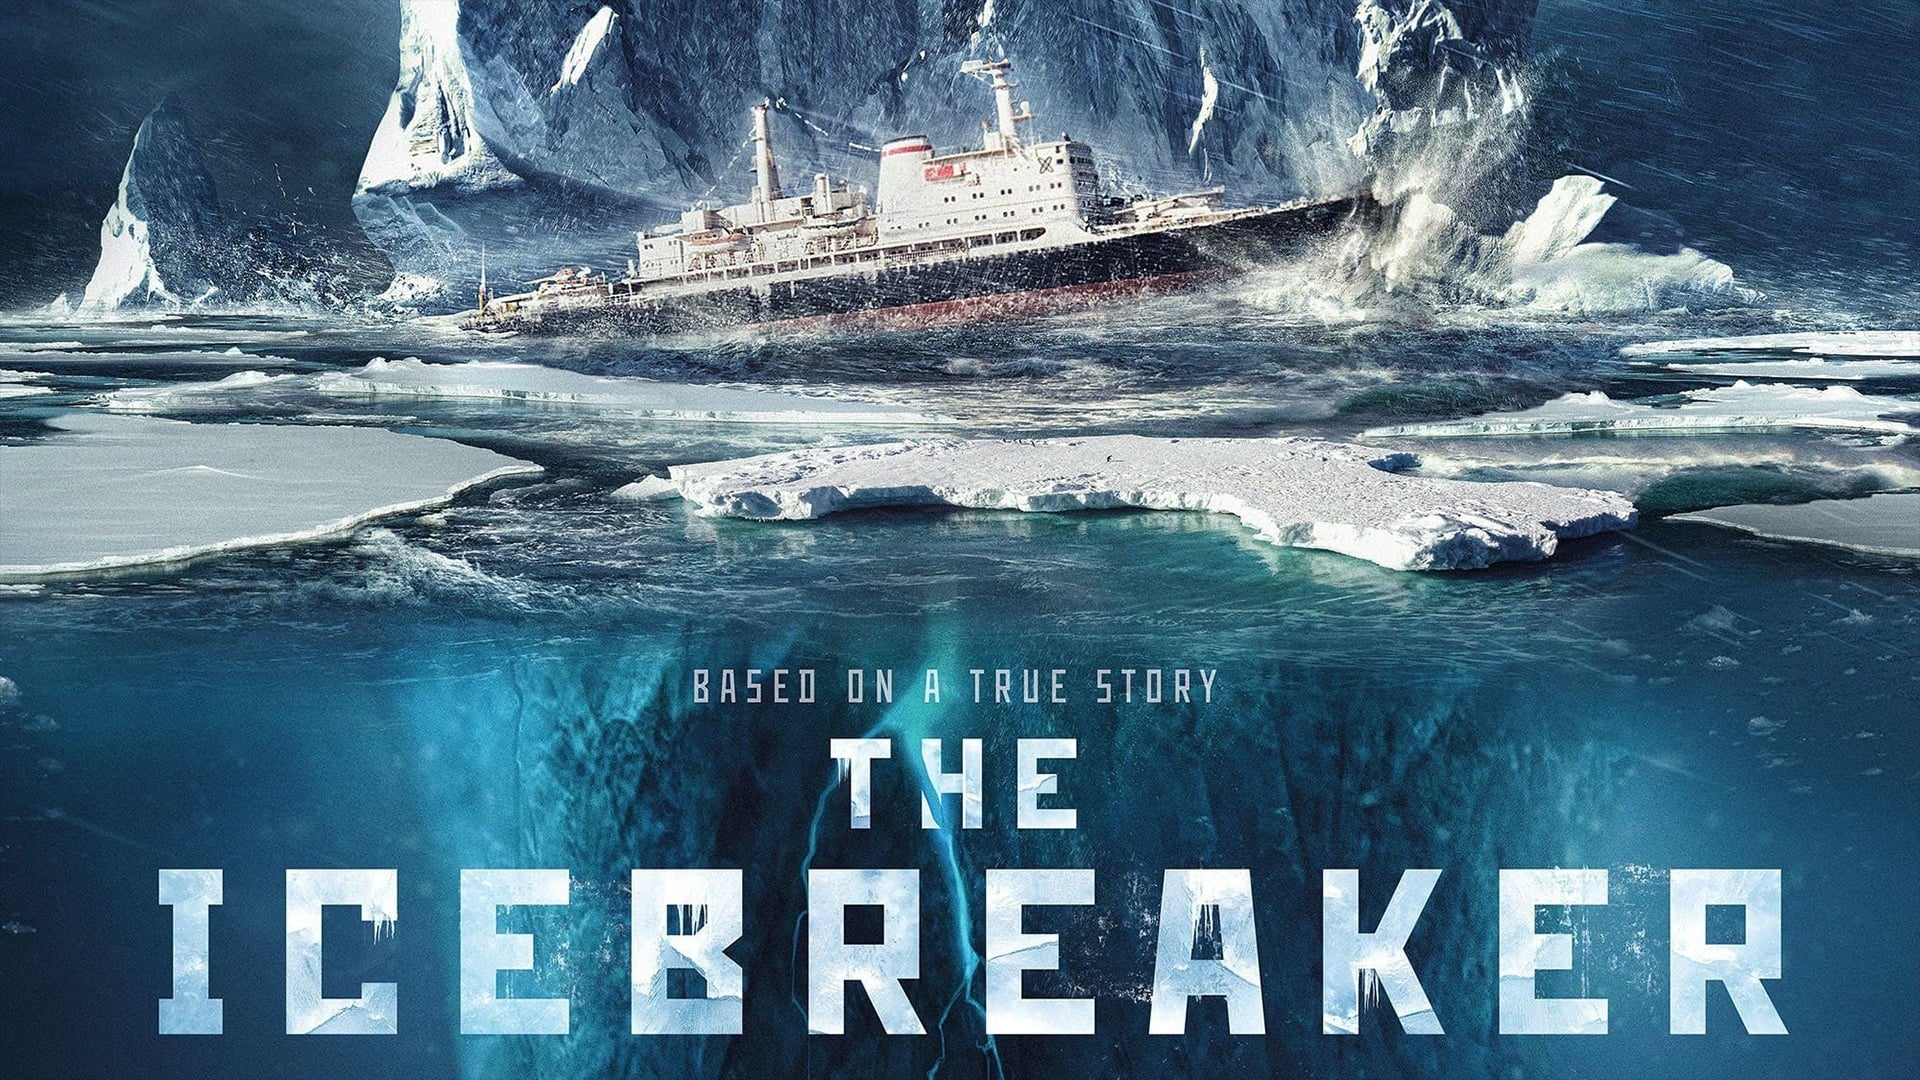 The Icebreaker (2016)